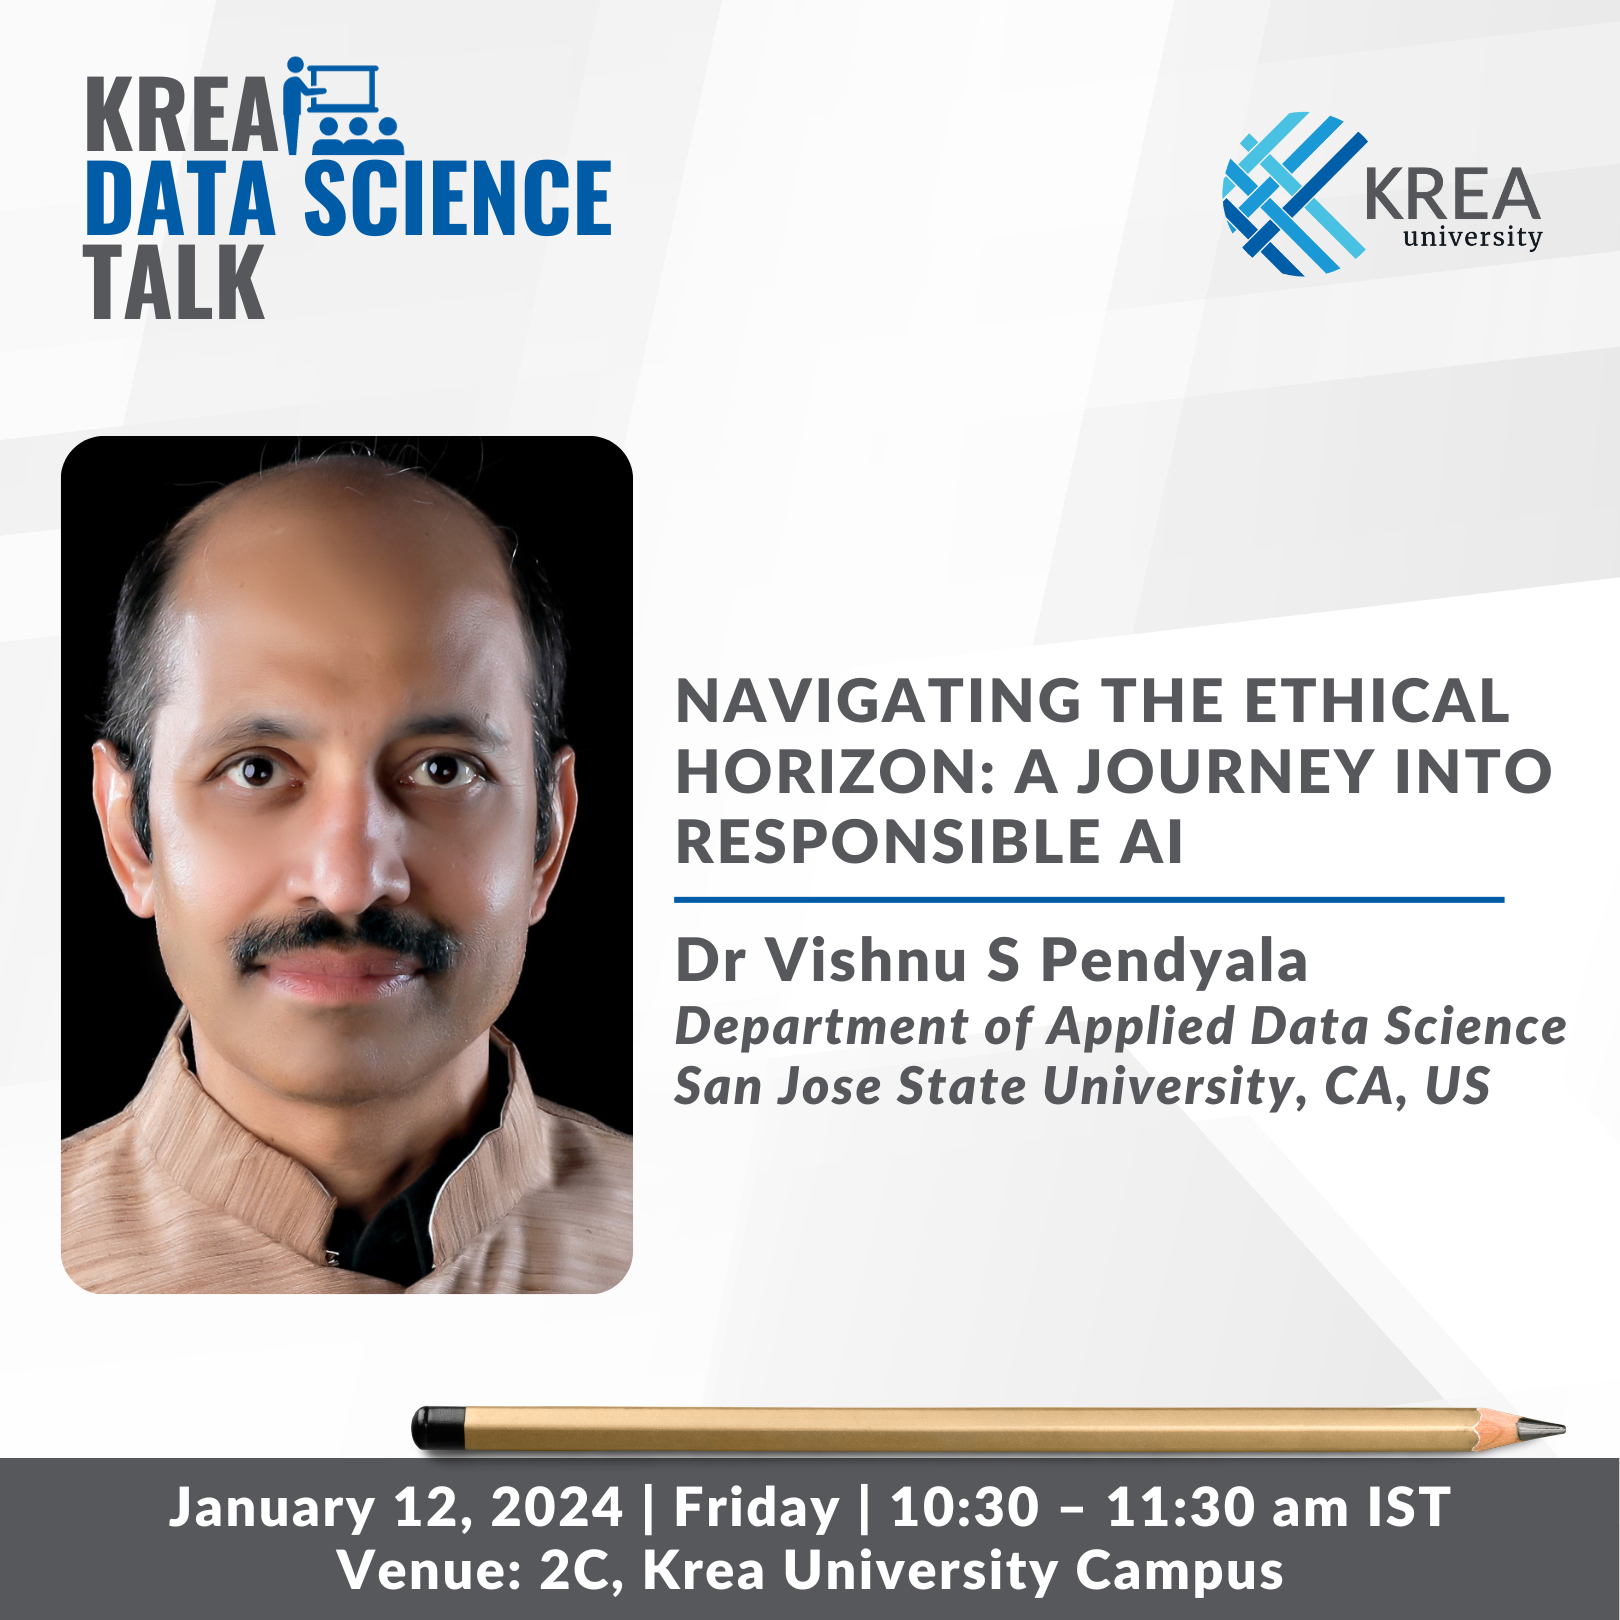 Krea Data Science Talk: A Talk on Navigating the Ethical Horizon: A Journey into Responsible AI by Dr Vishnu S Pendyala